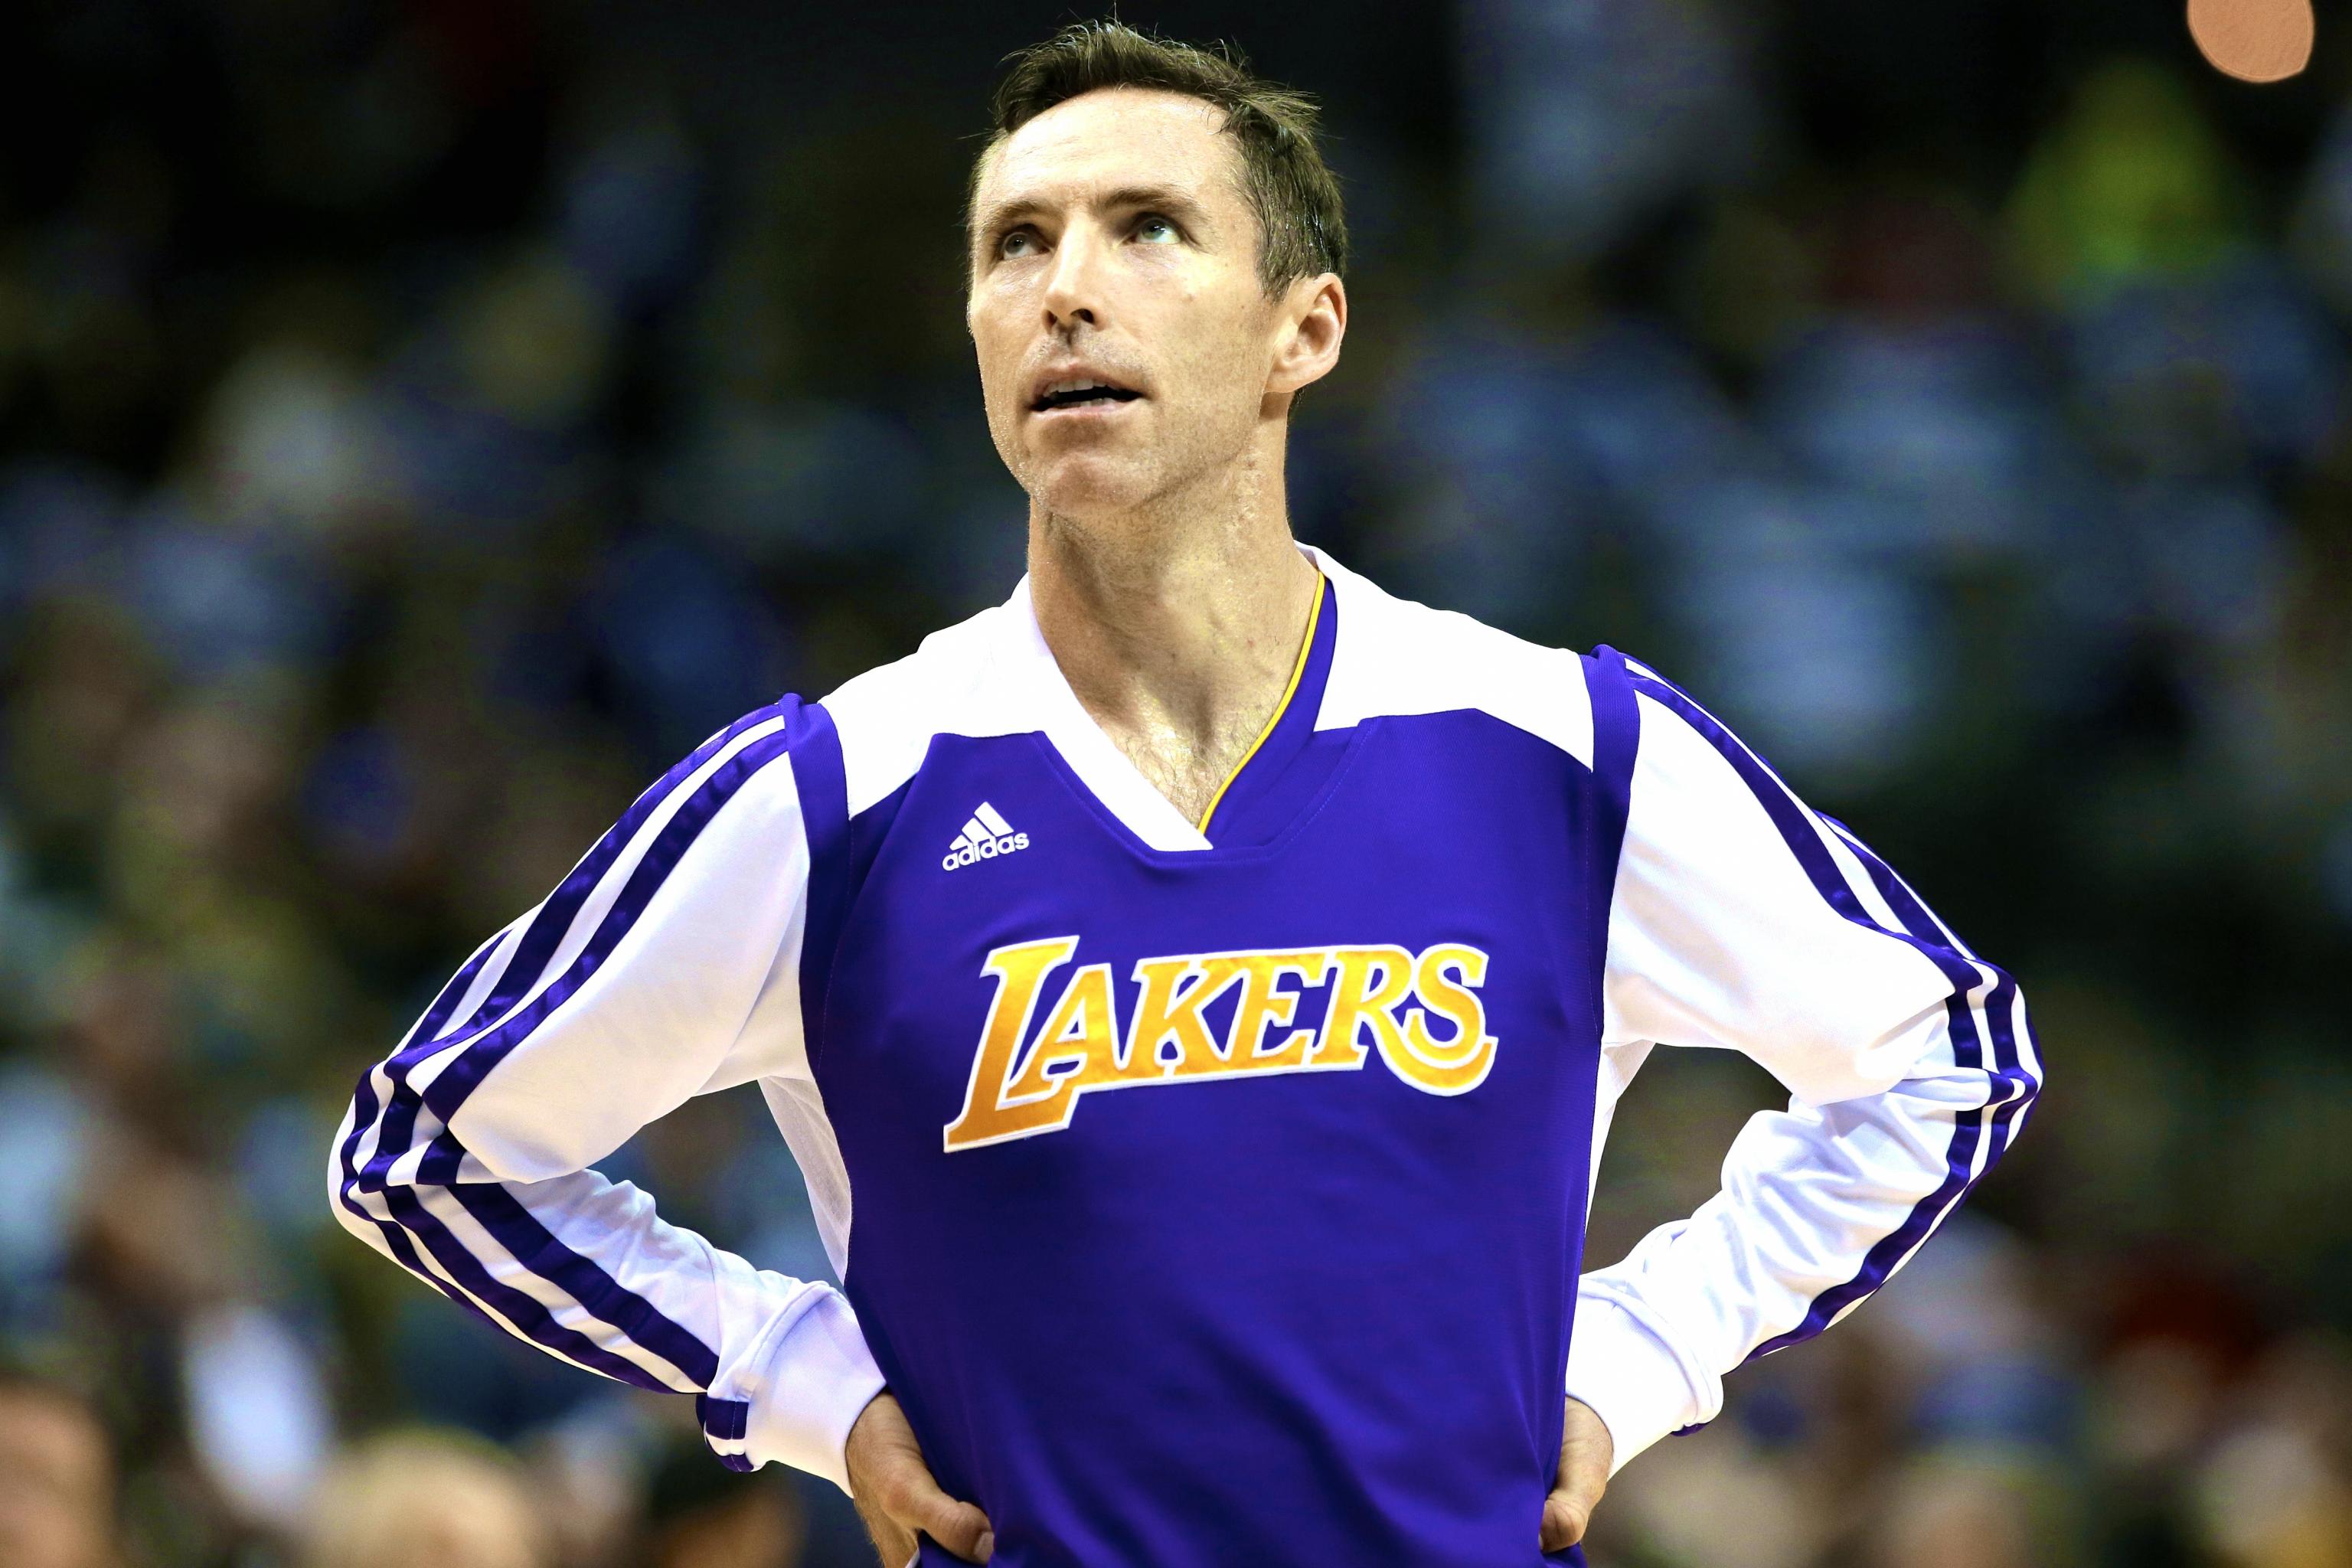 Lakers set to introduce Steve Nash